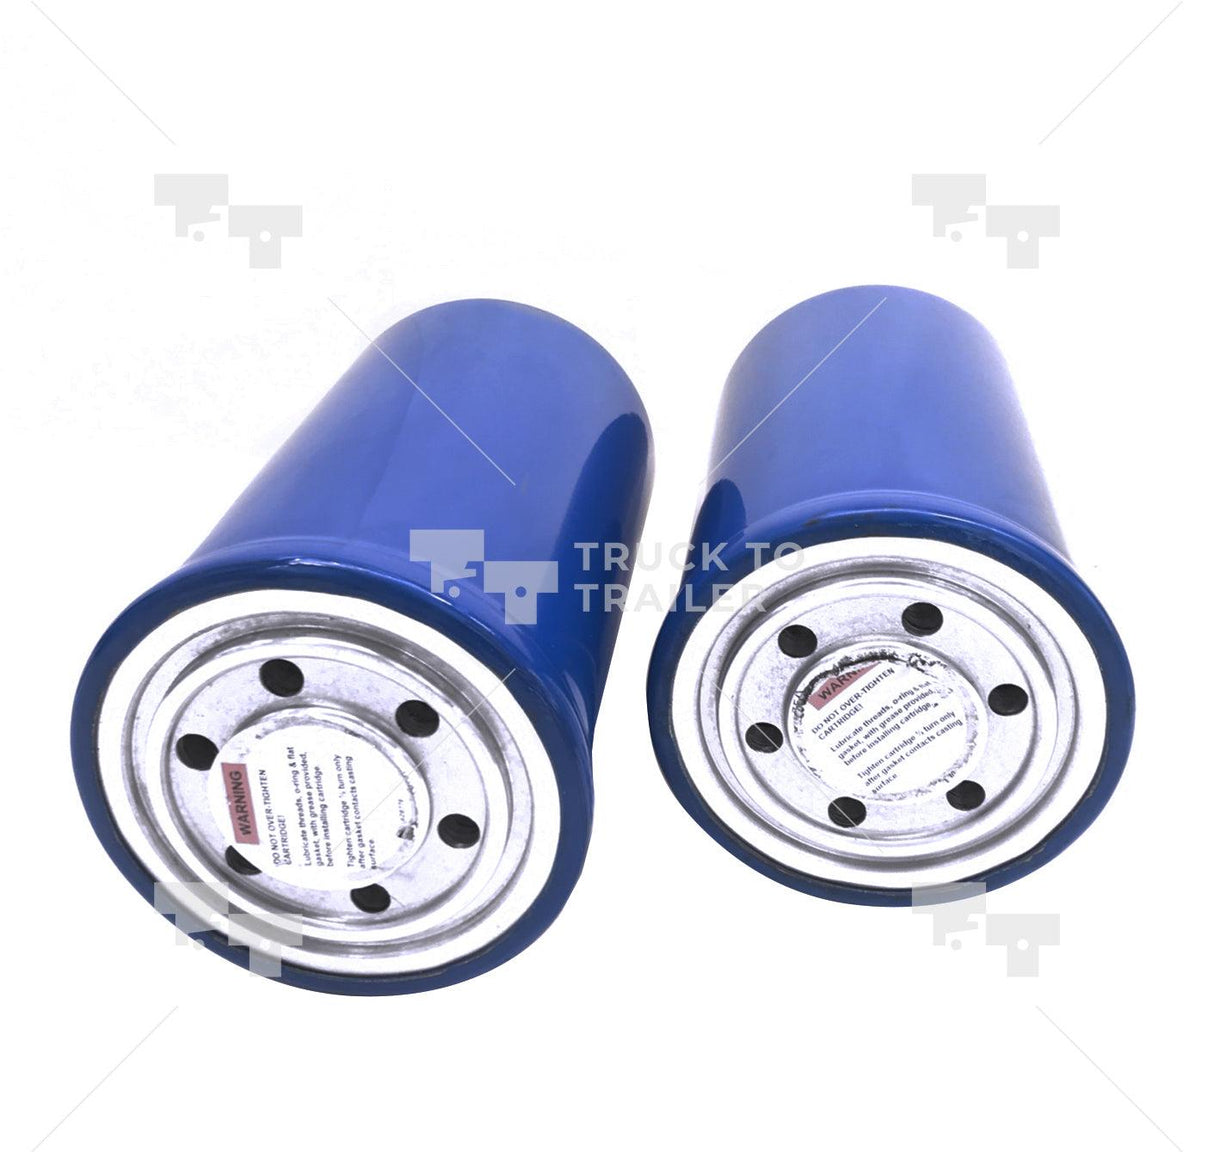 619704 Skf® Air Drier Dryer Cartridge Separator Filter.